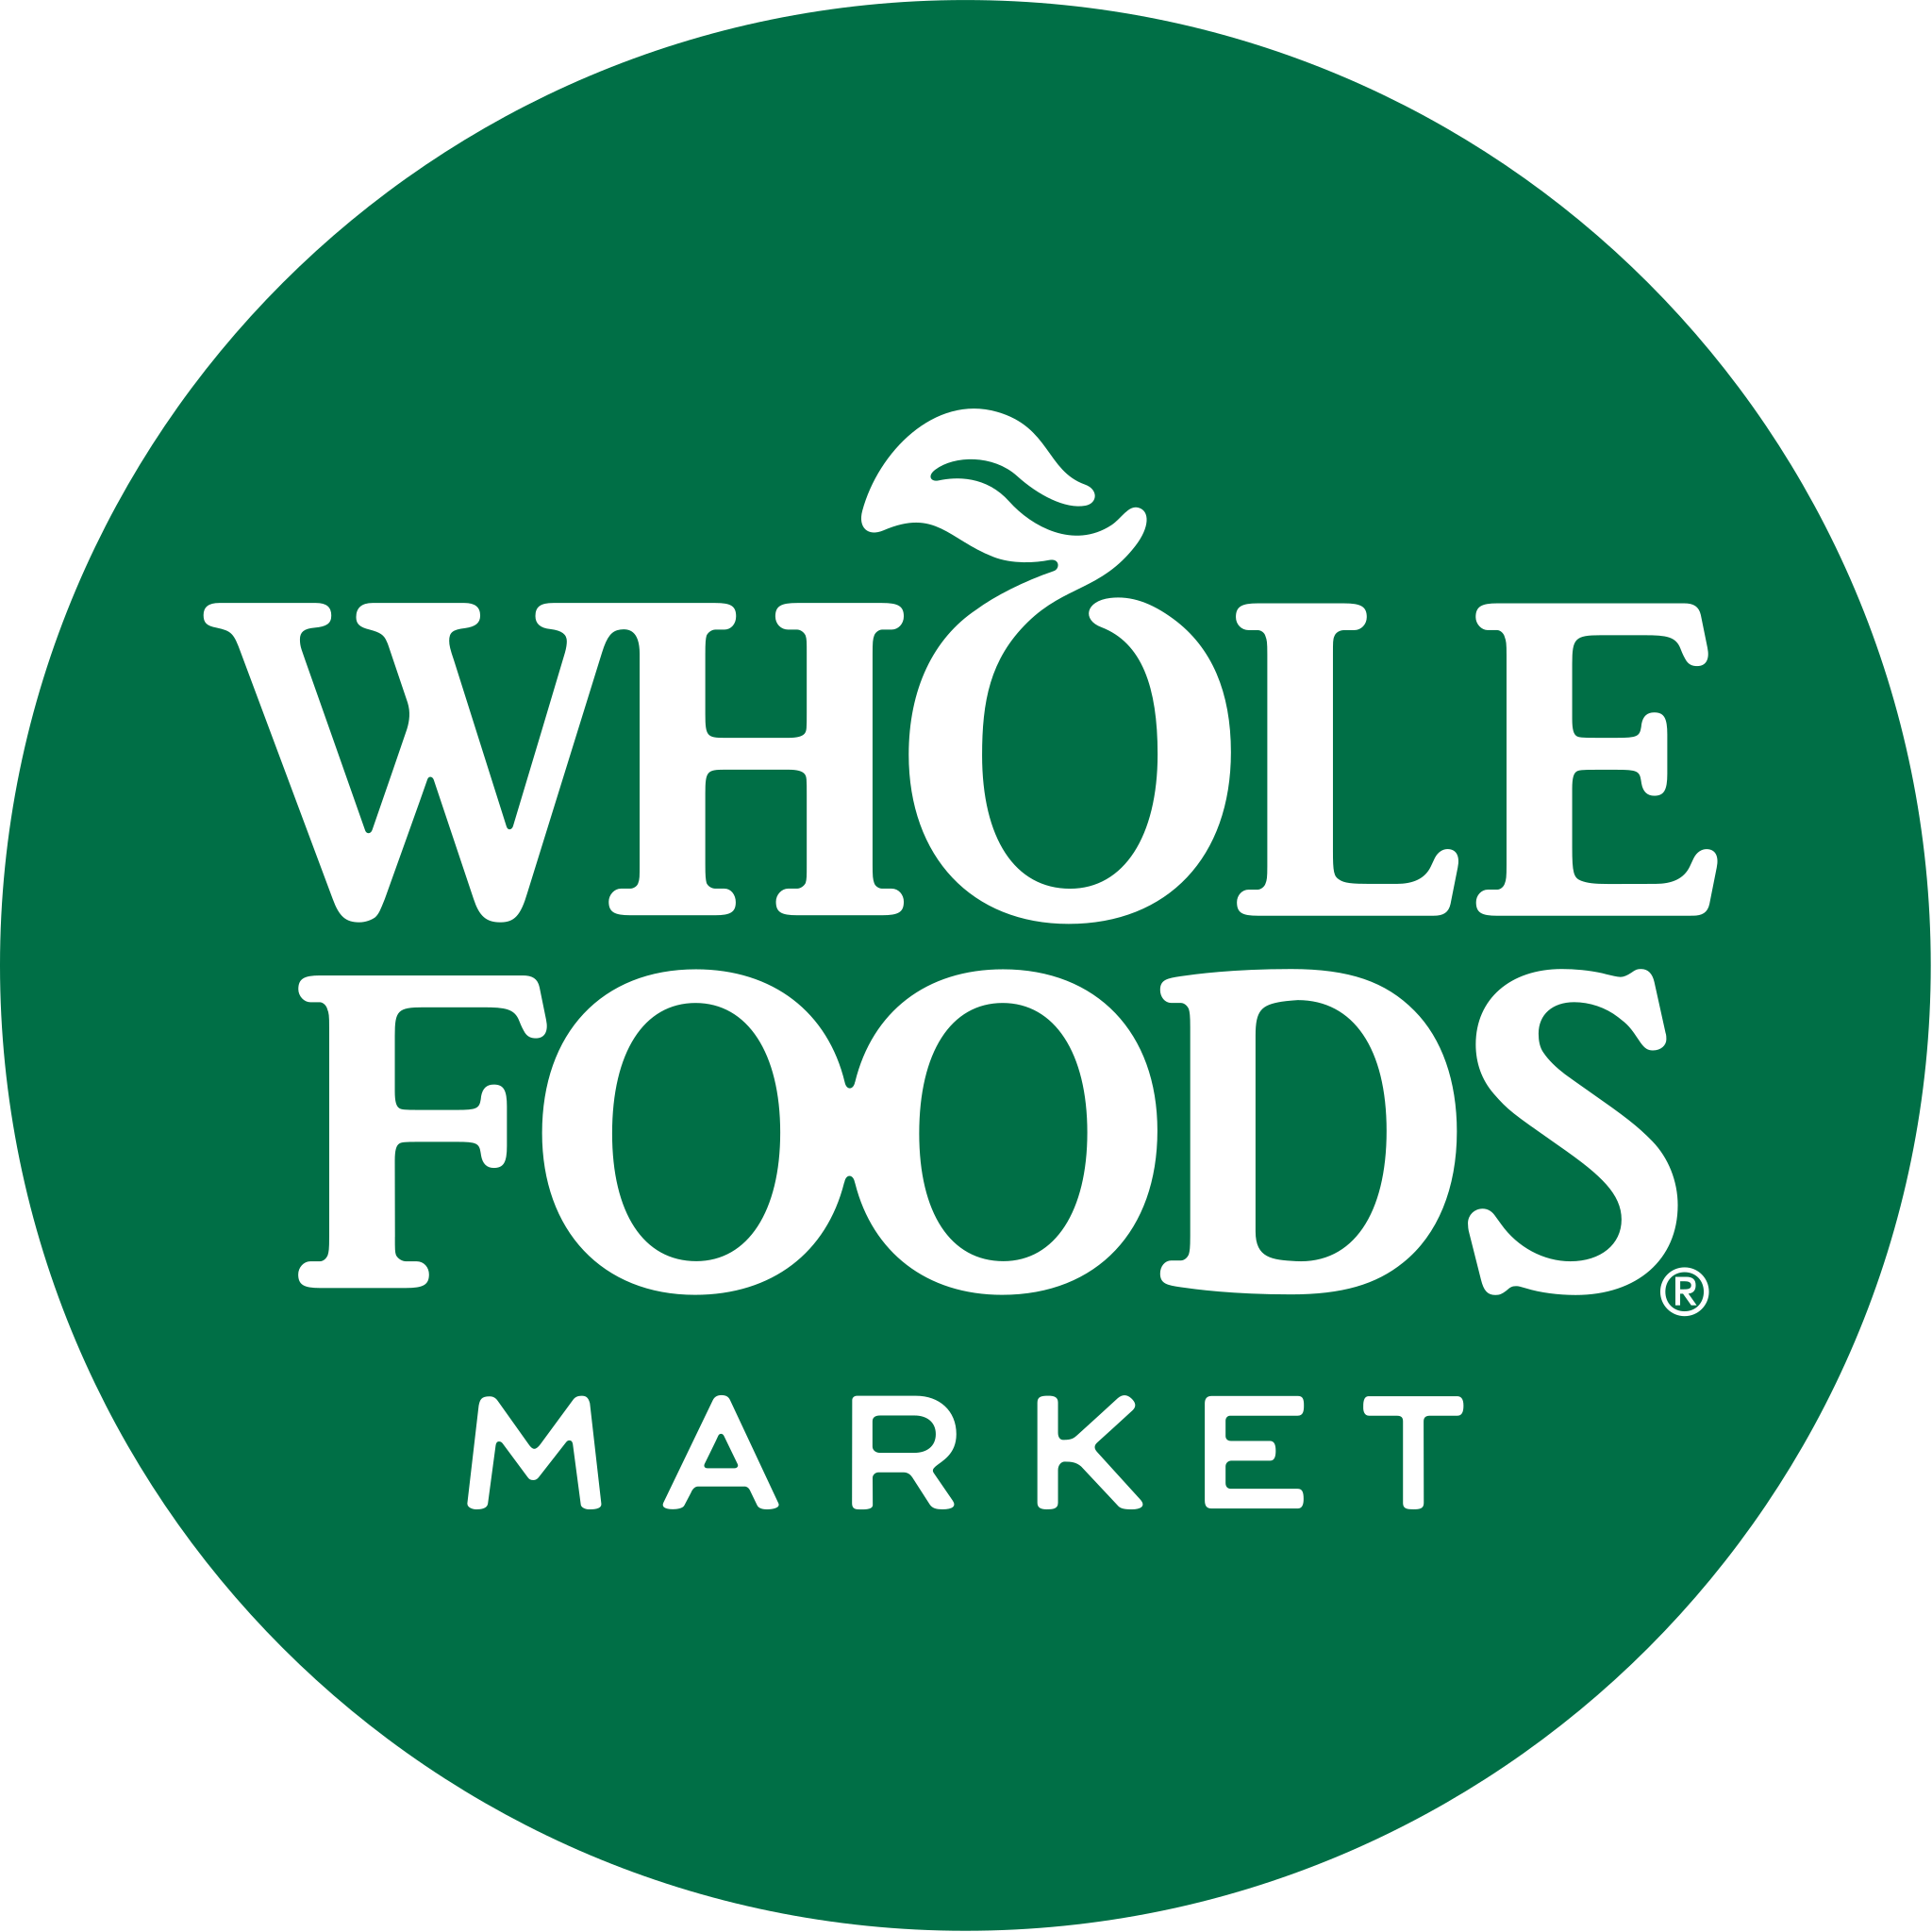 Whole_Foods_Market_201x_logo.svg